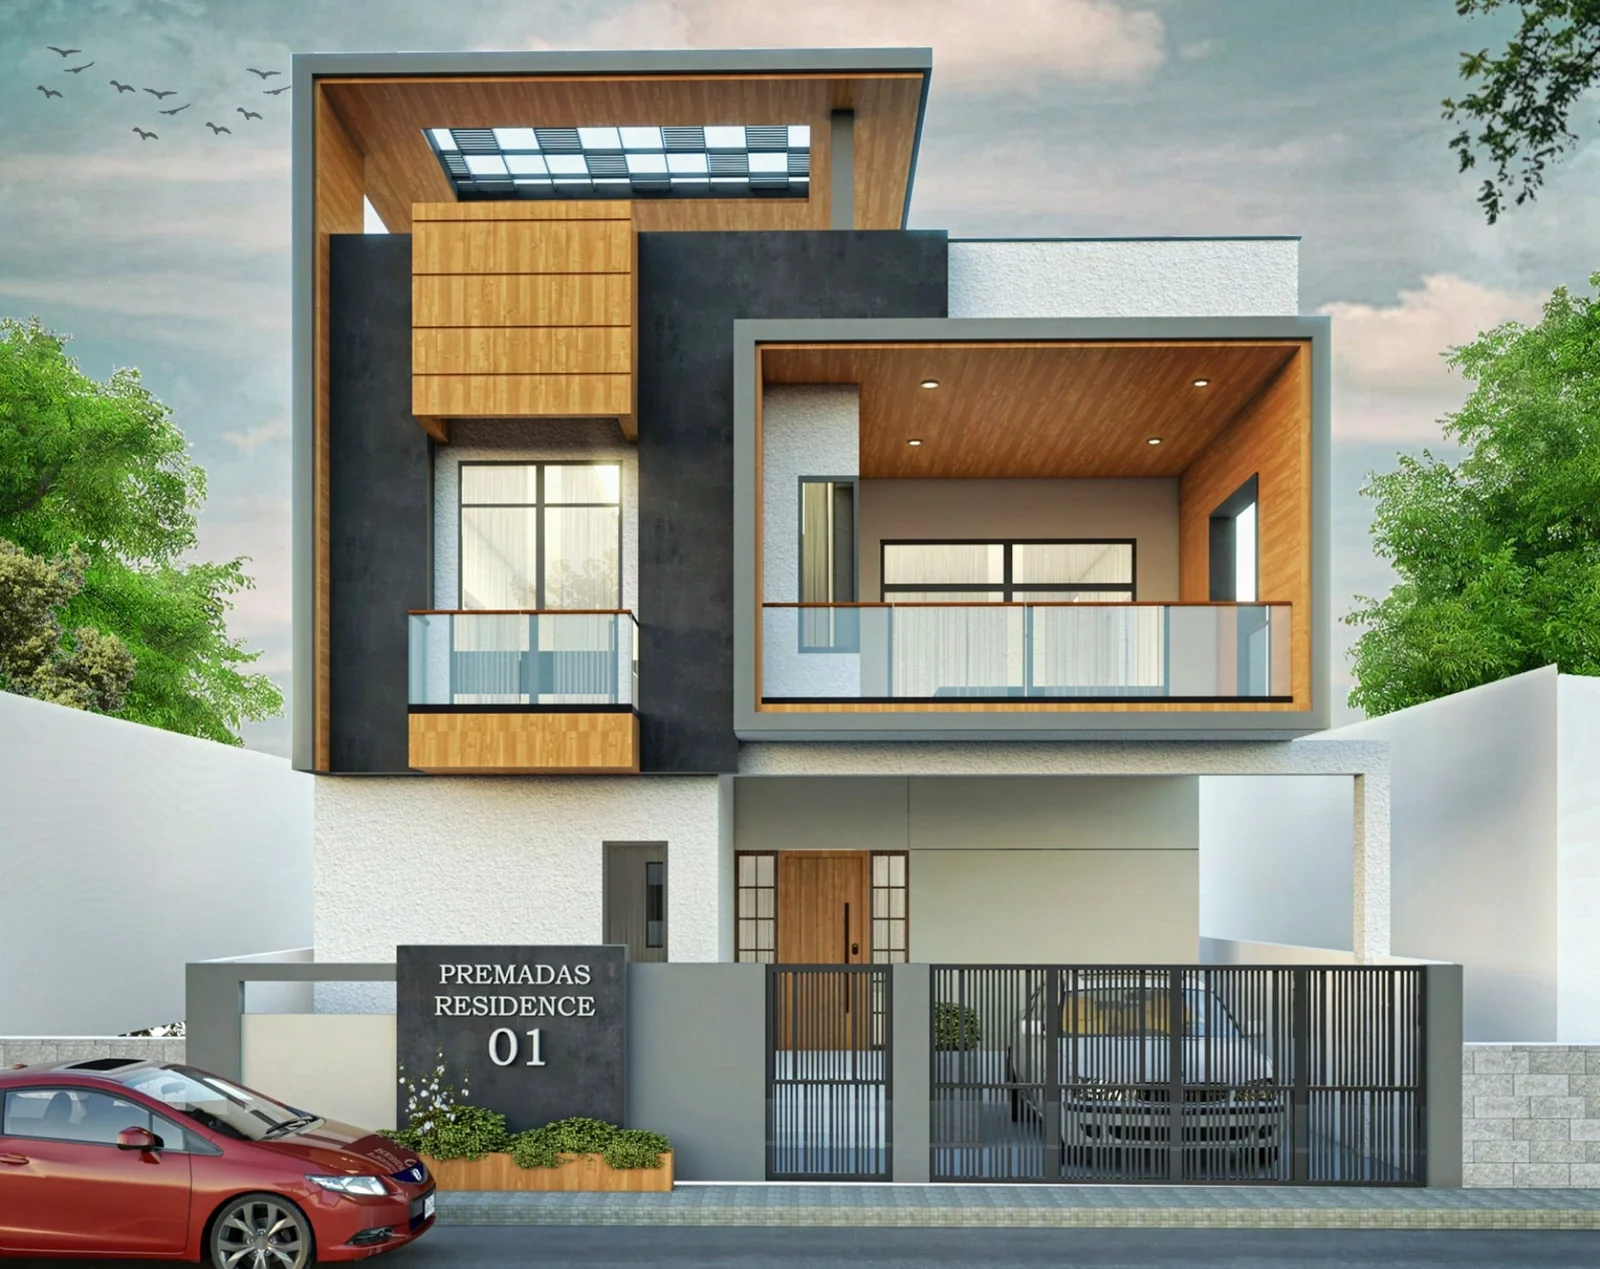 Residential Architect Design for Mr. Premadas